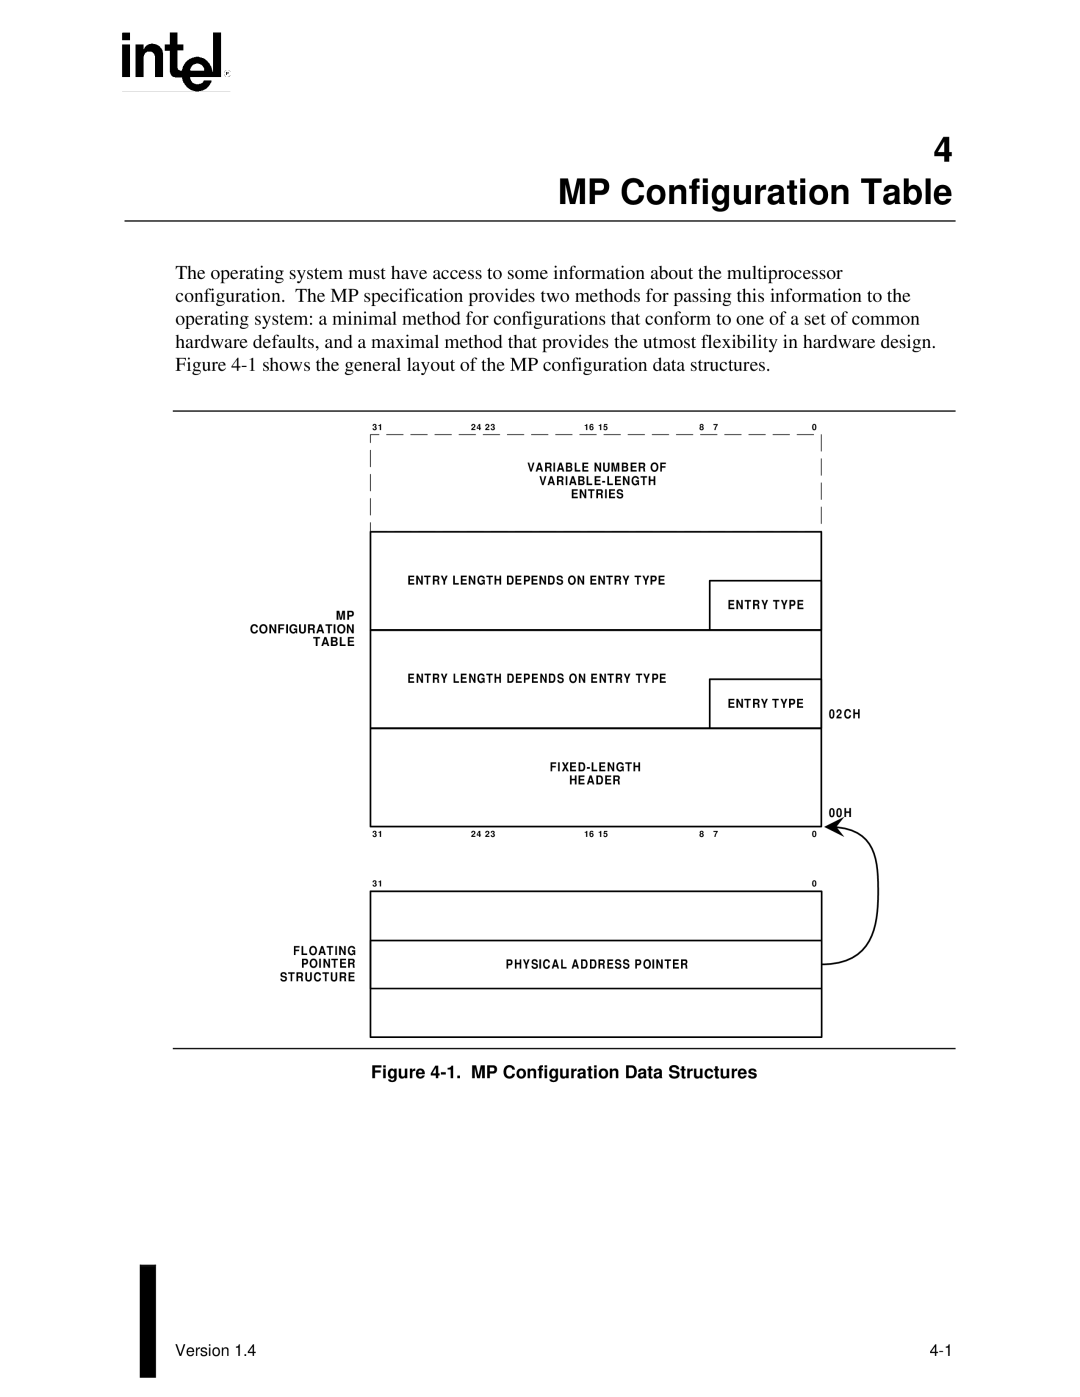 Intel MultiProcessor manual MP Configuration Table, 1.MP Configuration Data Structures 